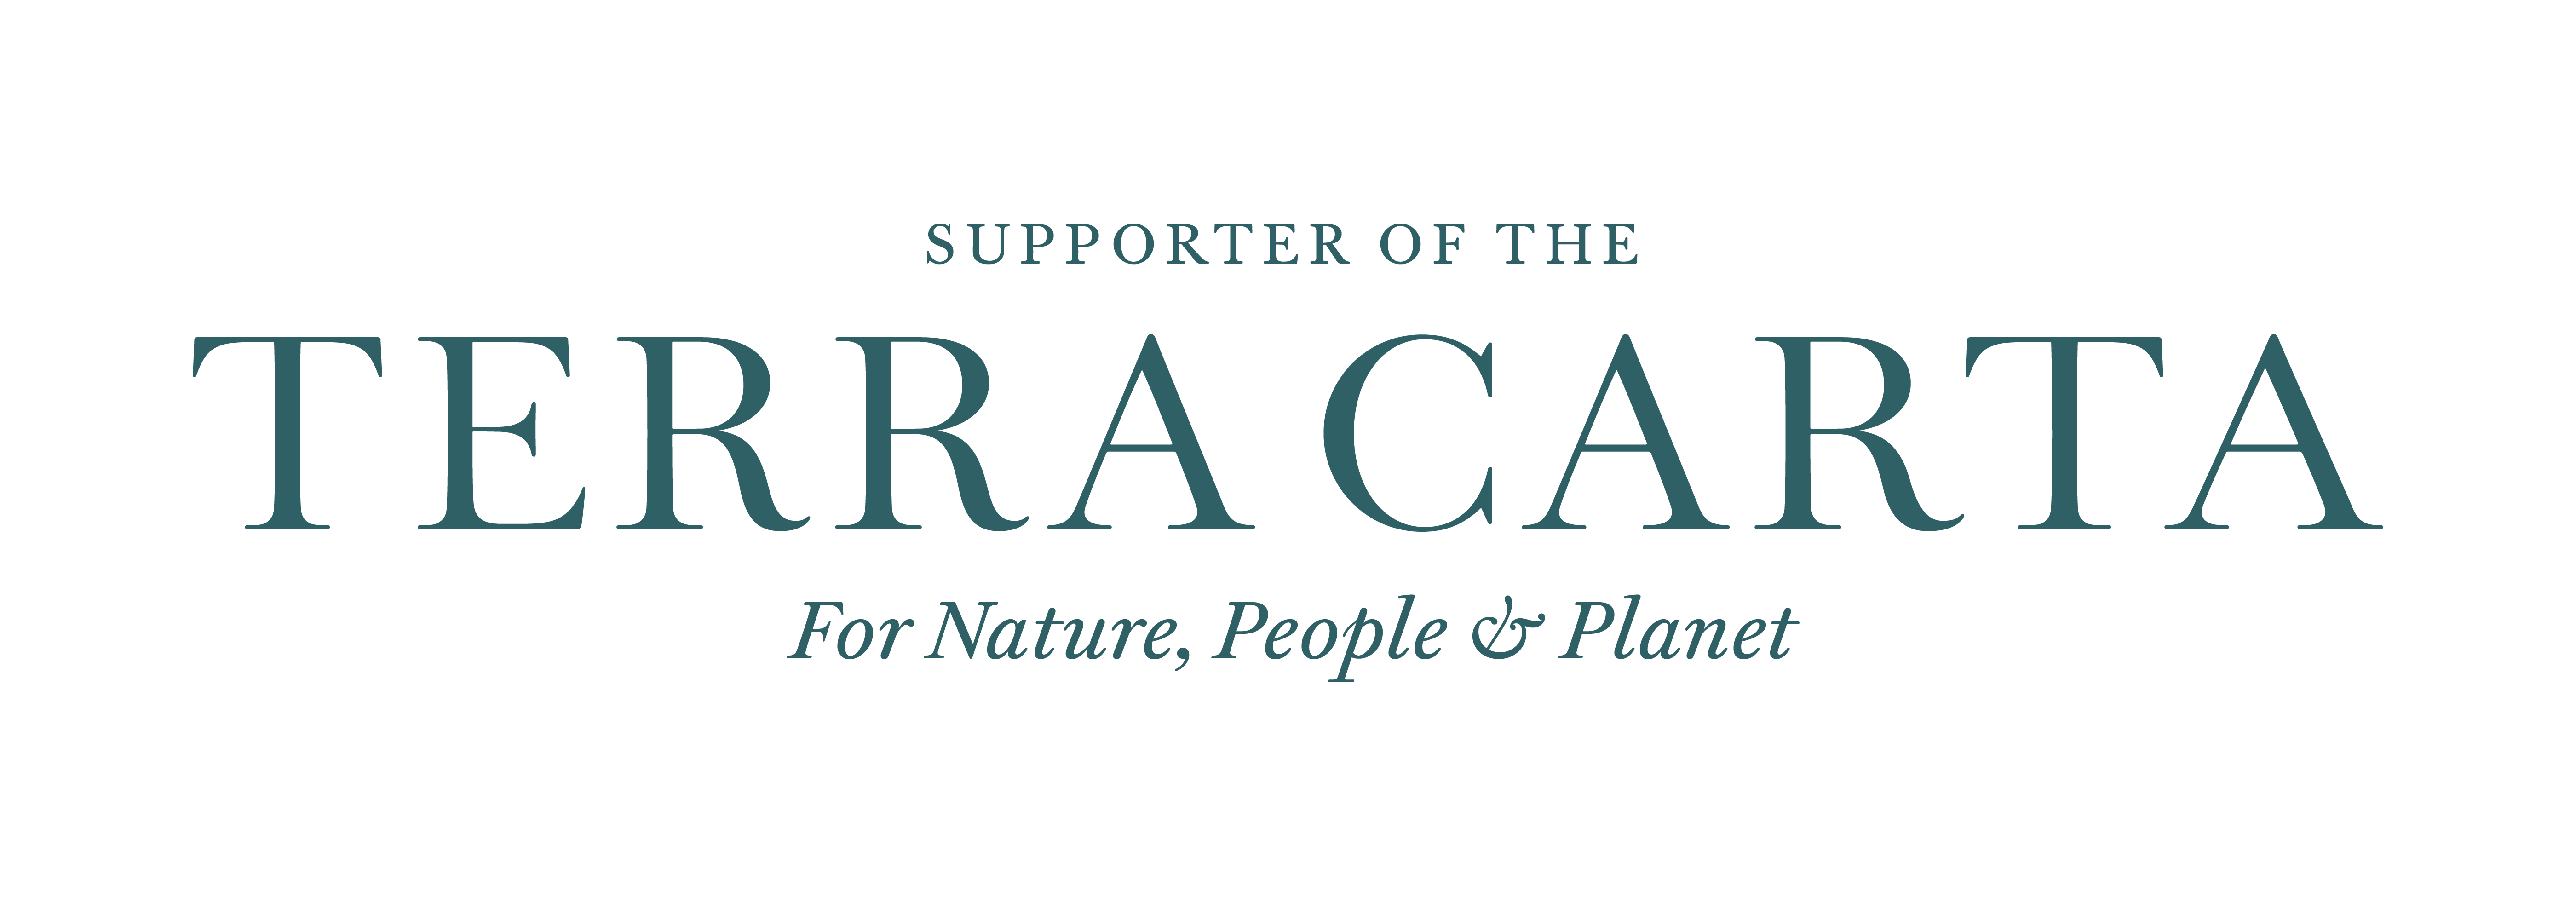 Supporters of Terra Carta logo